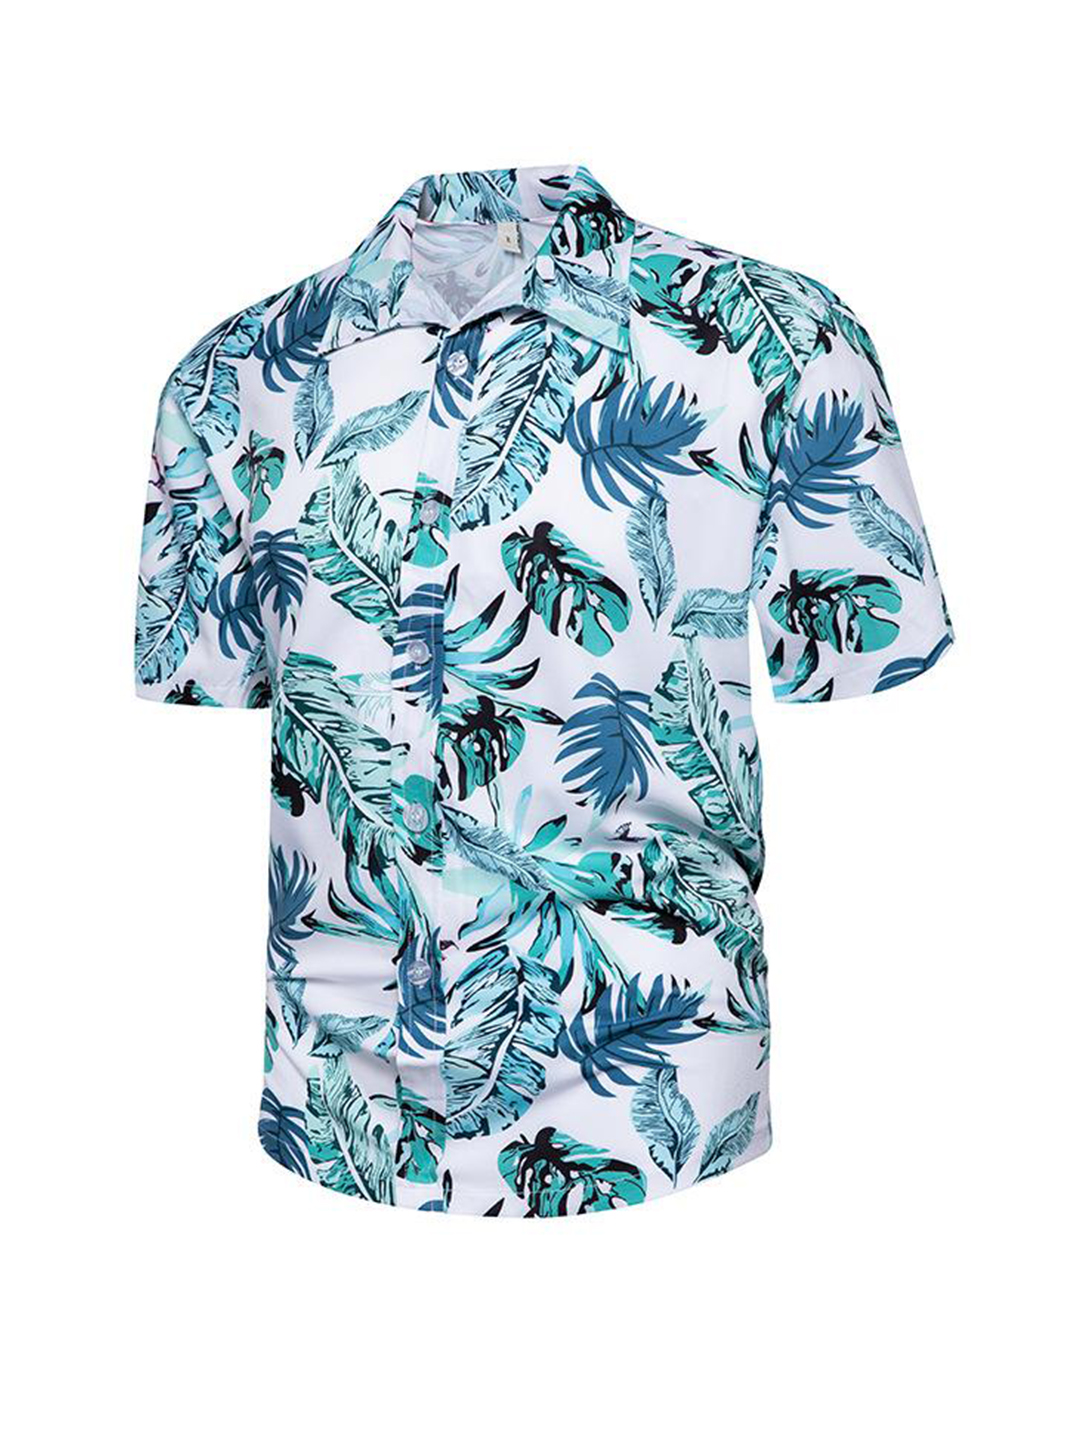 Men's George Hawaiian Style Short-sleeved 3D print shirt-poisonstreetwear.com